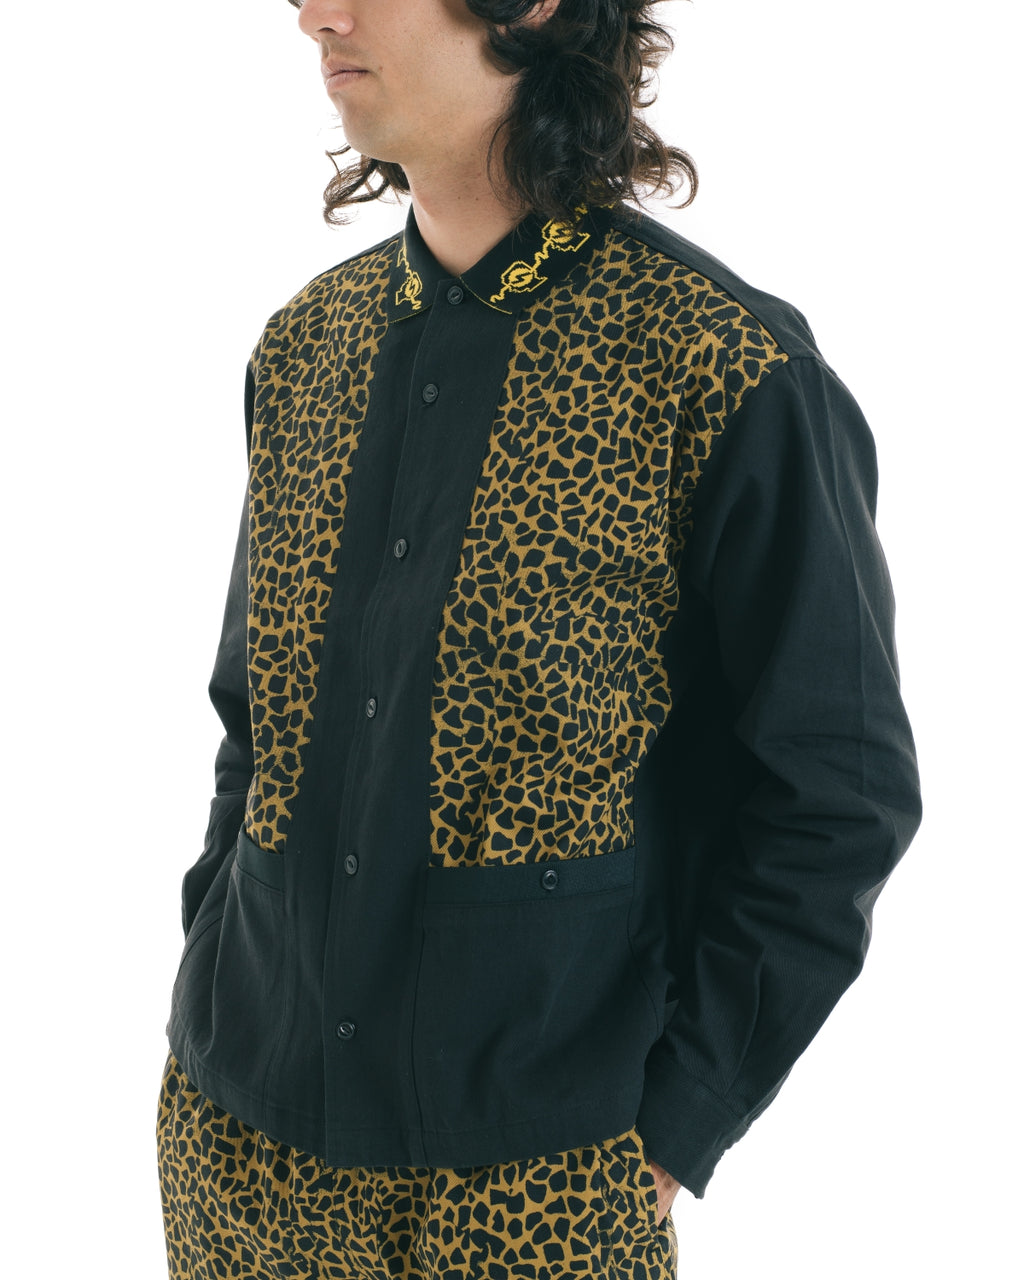 Cheetah Cabana Shirt - Leopard / Black 6